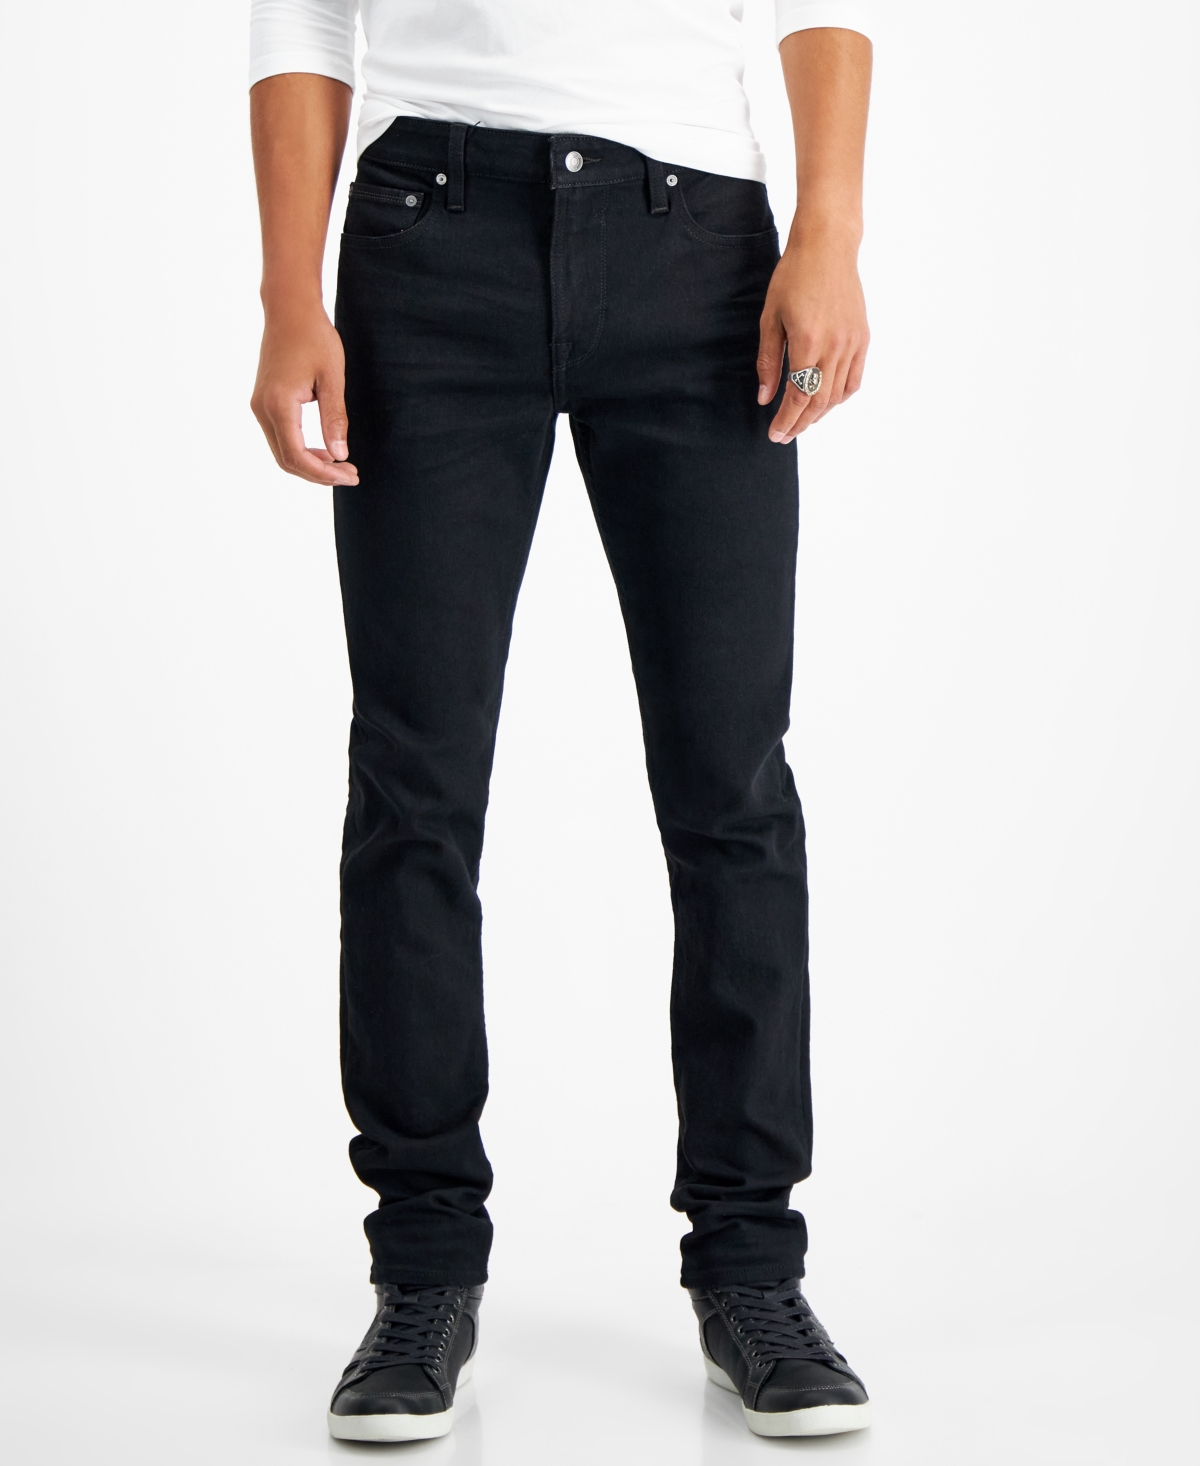 Men's Eco Black Wash Skinny Fit Jeans - Jailbreak Wash